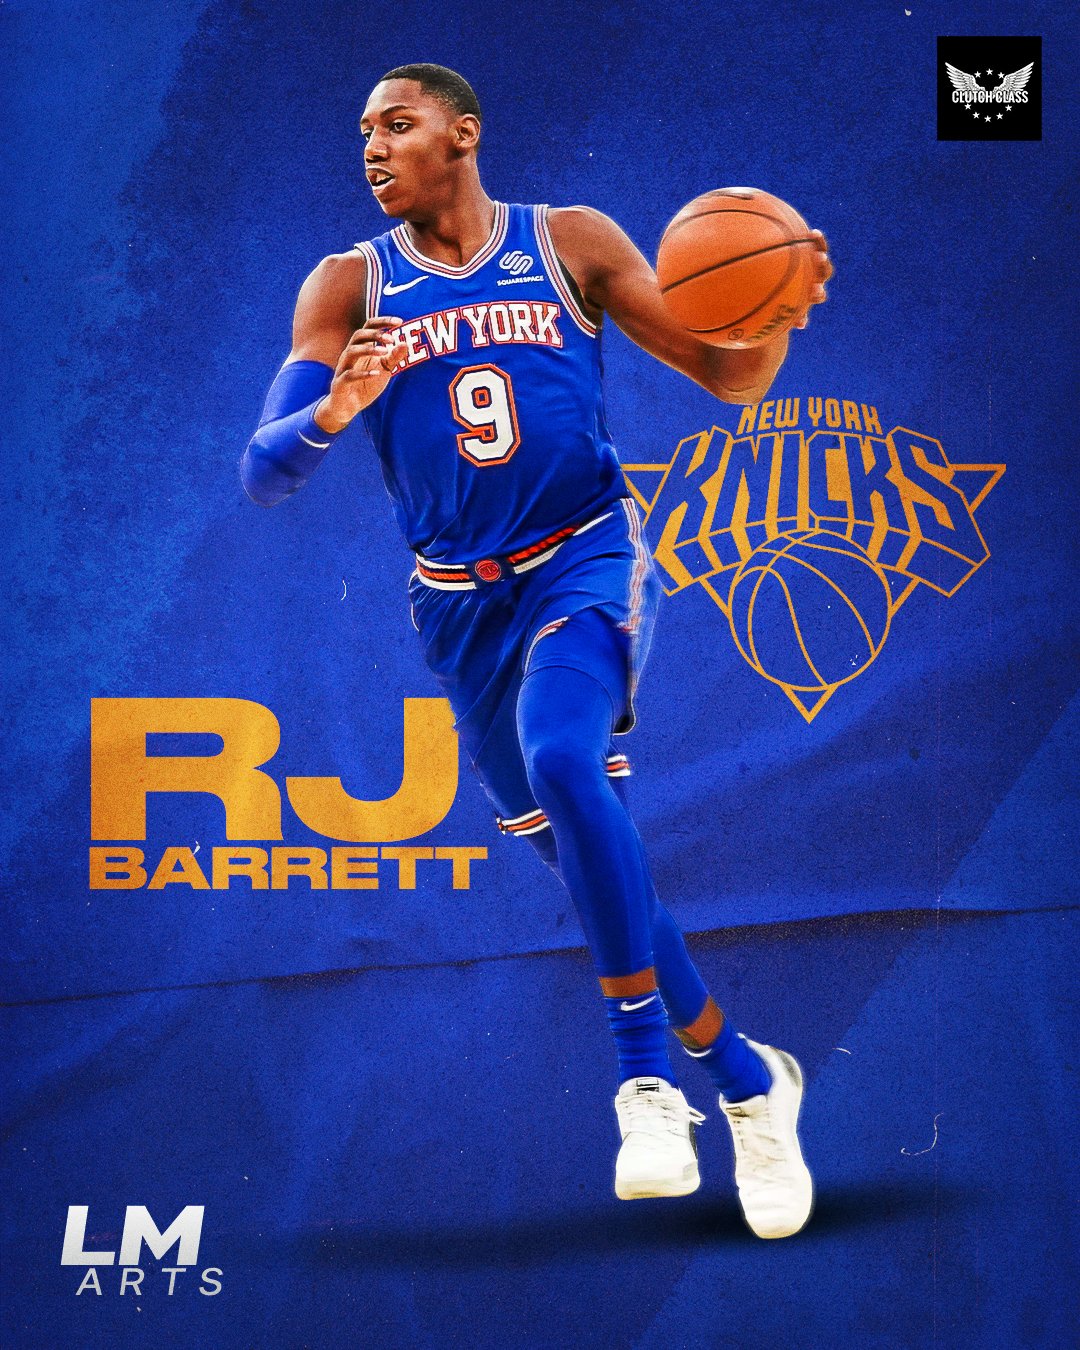 New York Knicks RJ Barrett draws unique comparison to Kawhi Leonard